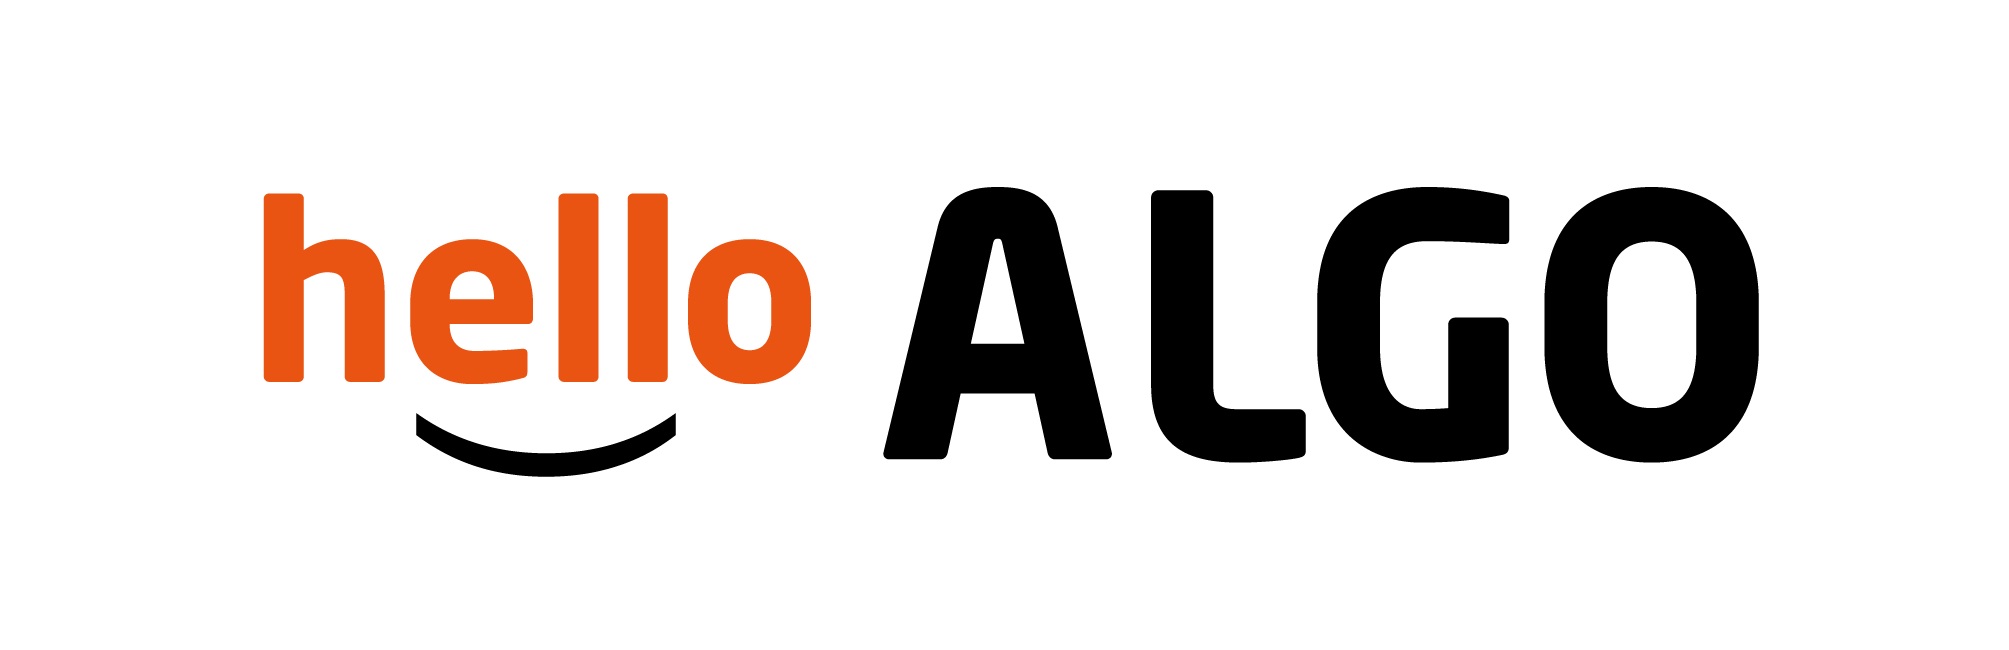 helloalgo_logo